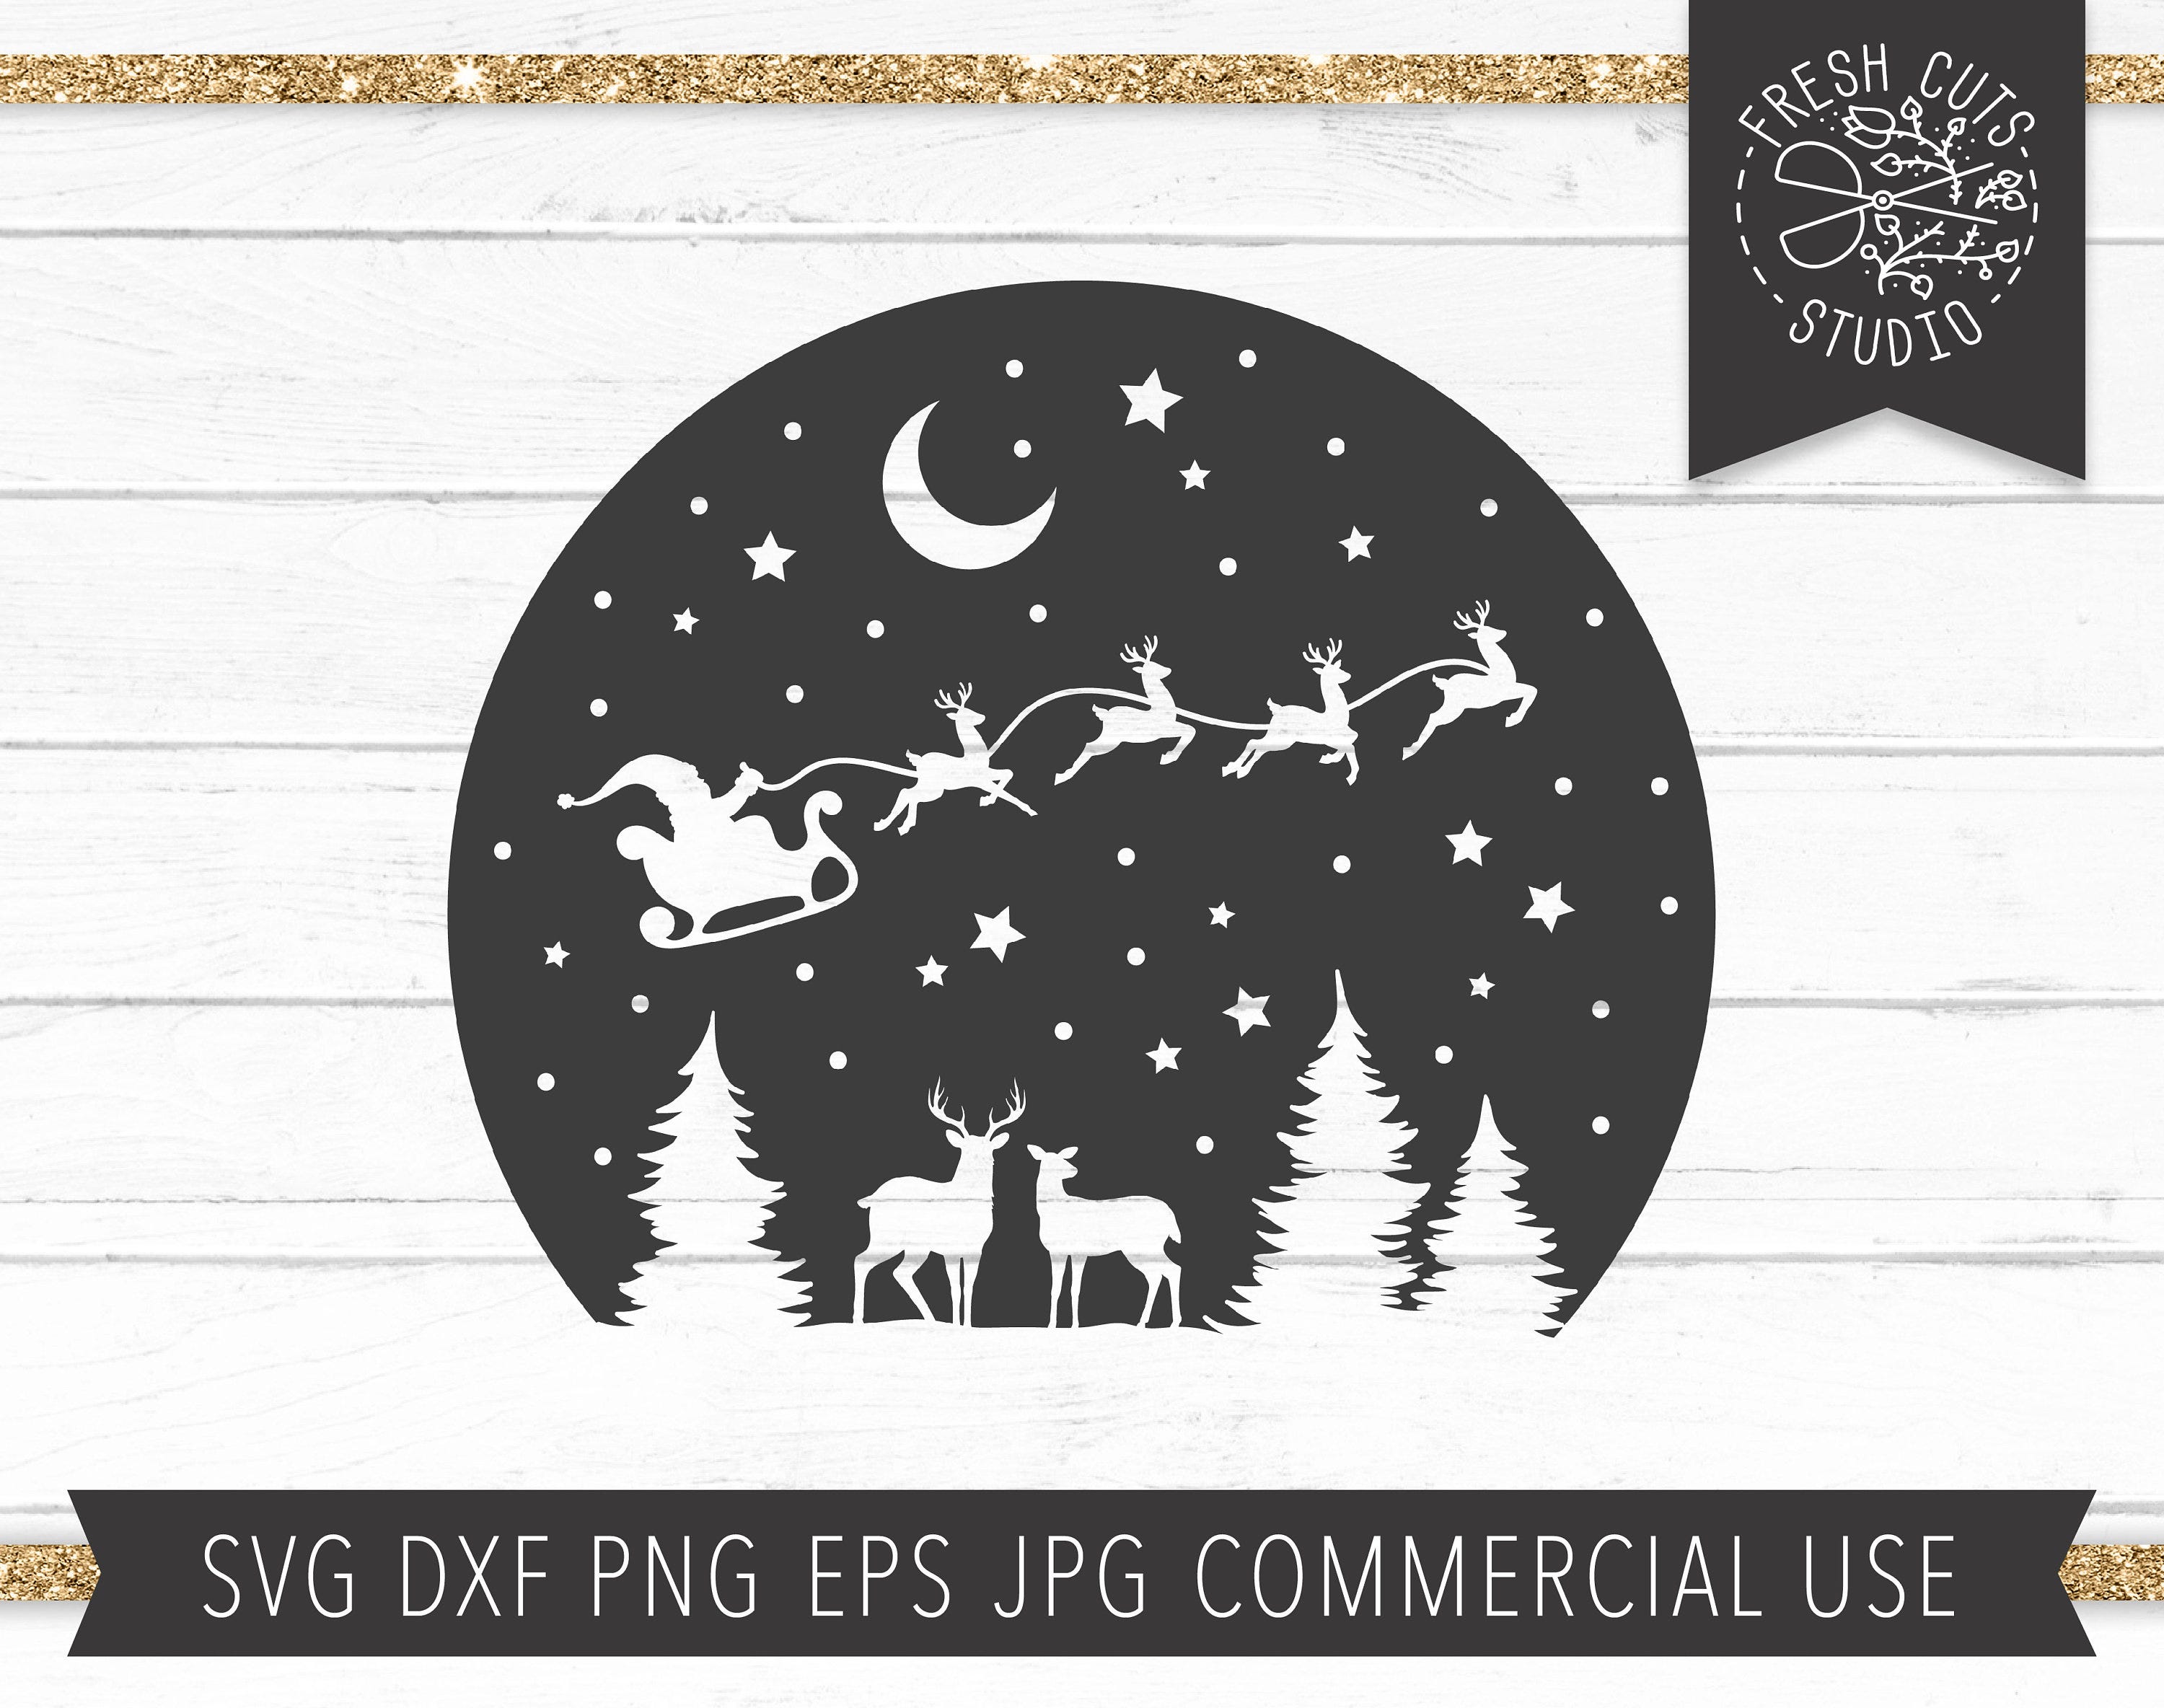 Winter Christmas Scene SVG Cut File, Santa svg, Rustic Christmas SVG, Starry Snowy Forest with Deer, Reindeer svg, Winter Landscape Circle